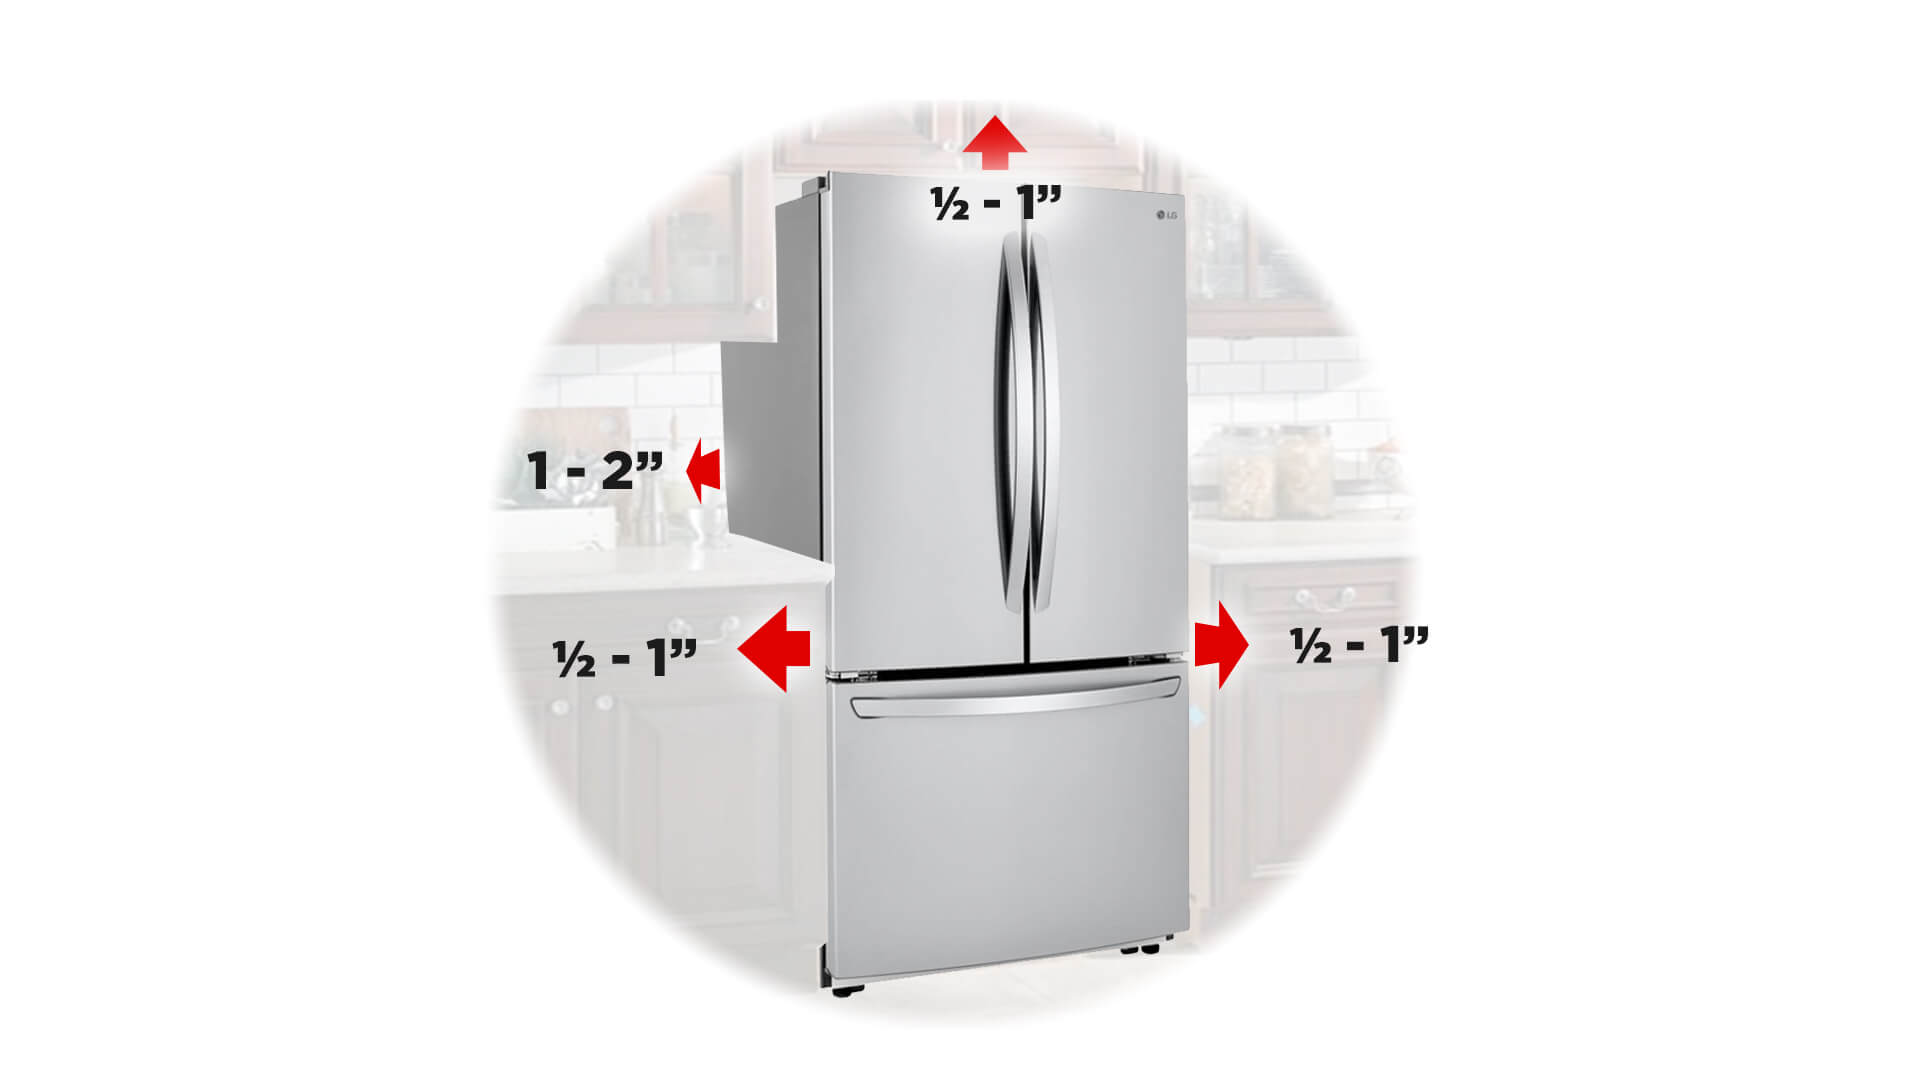 Refrigerator clearances